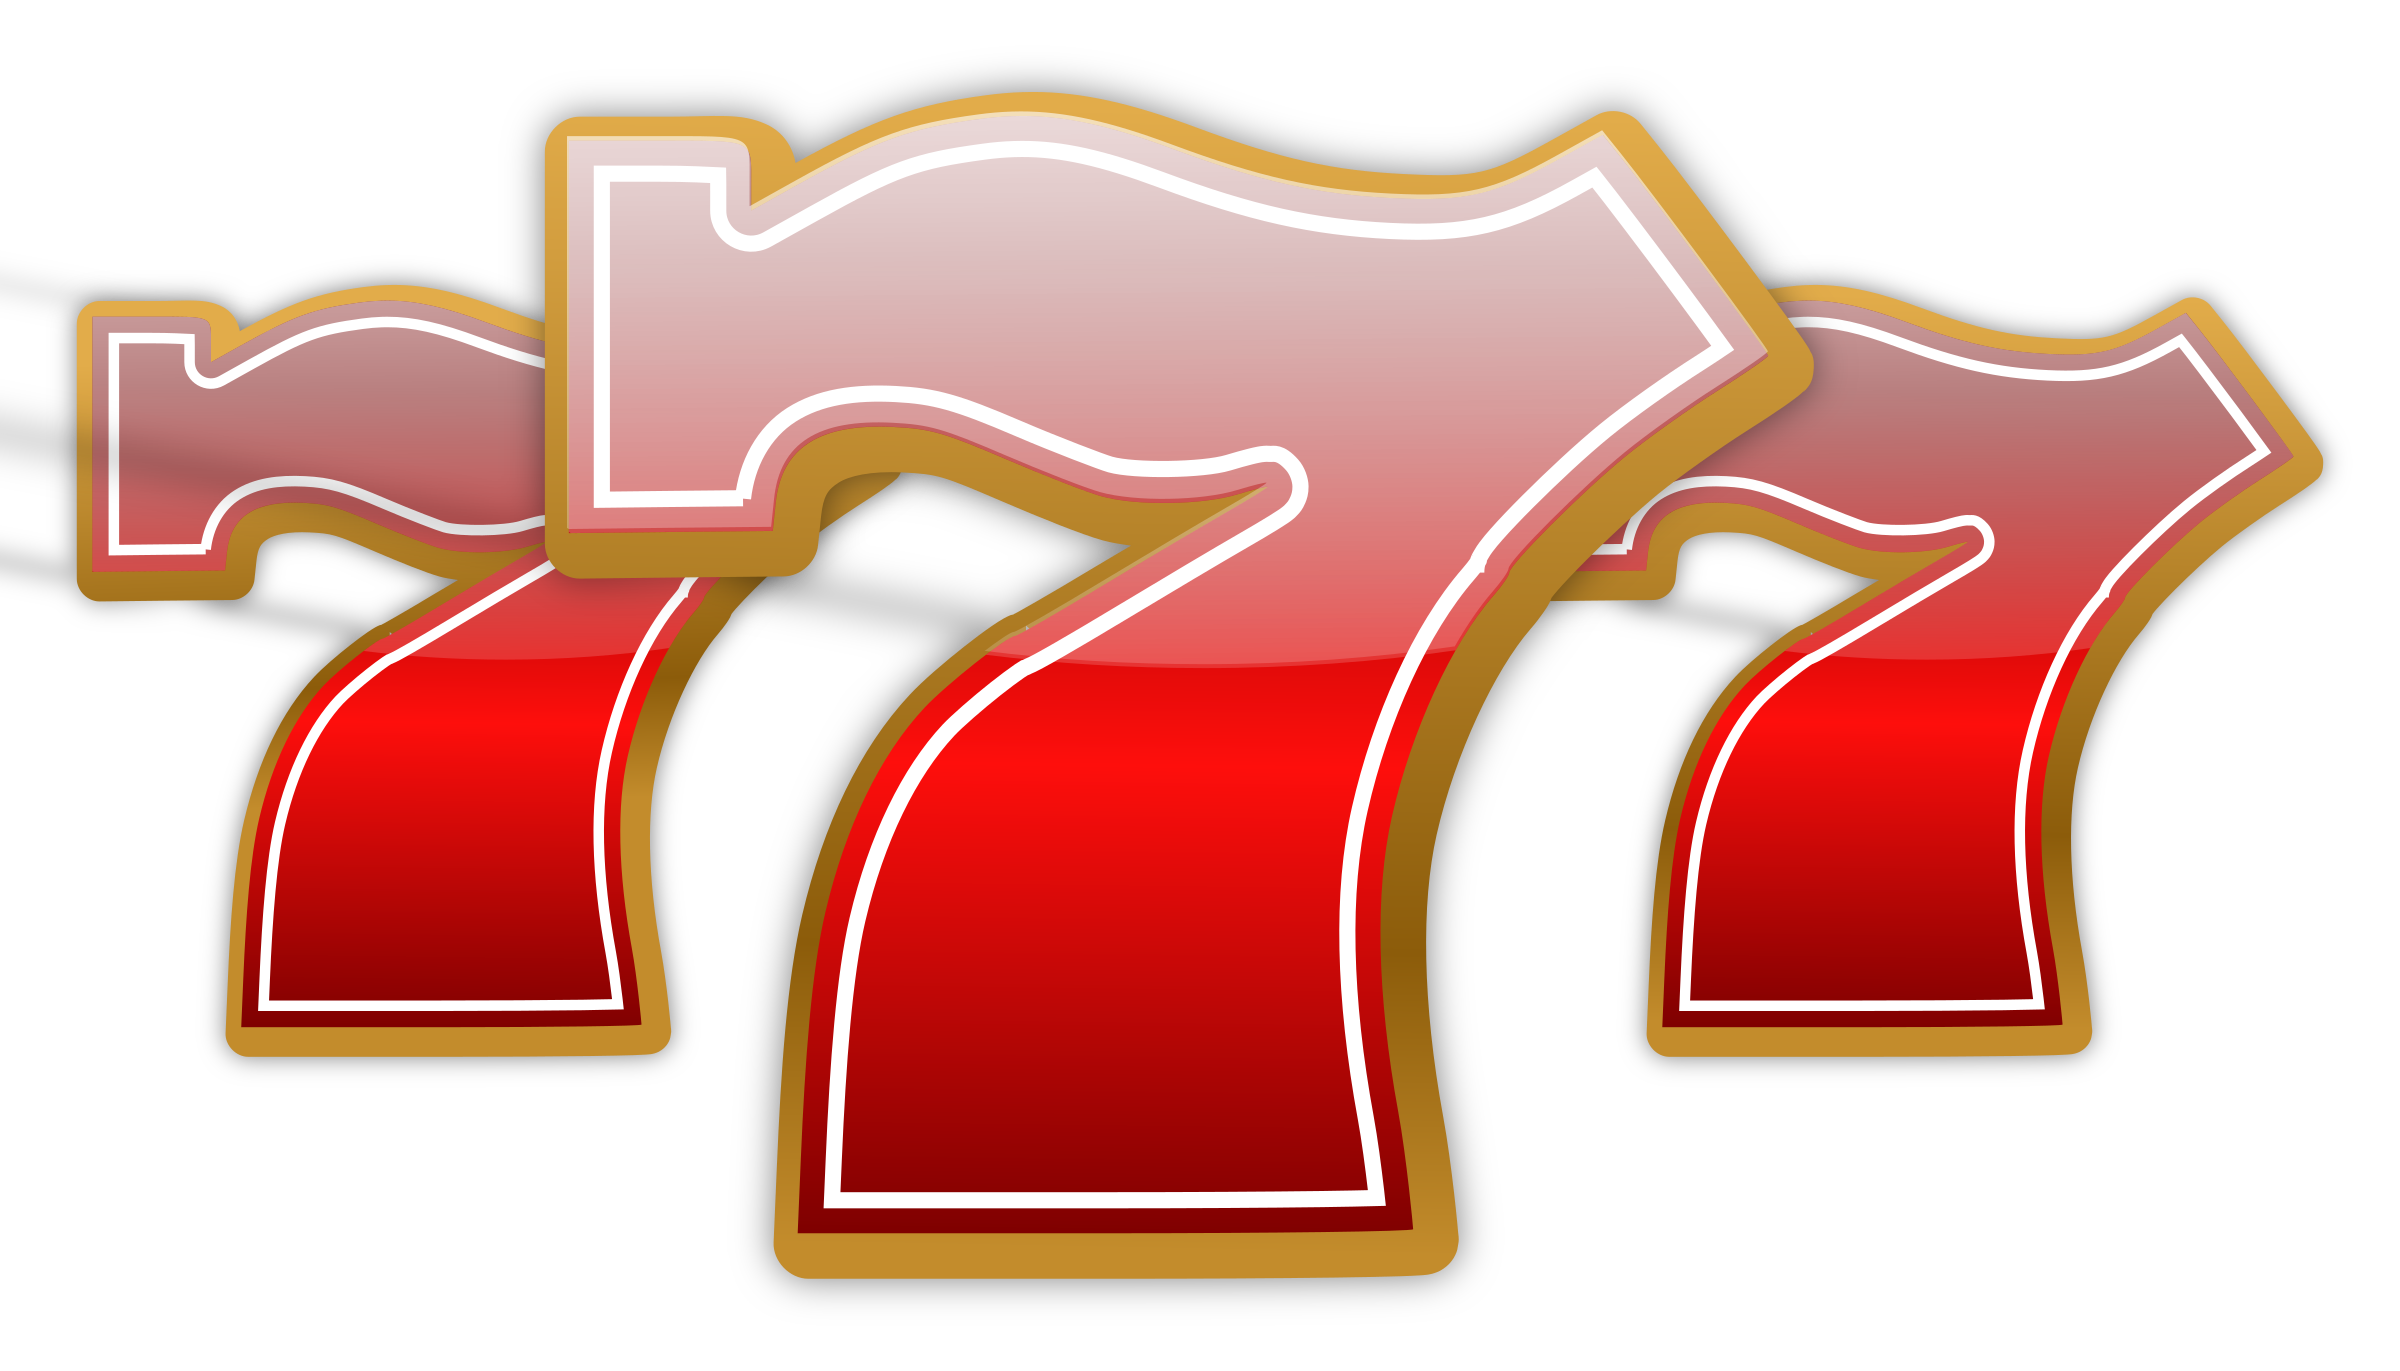 dice clipart logo